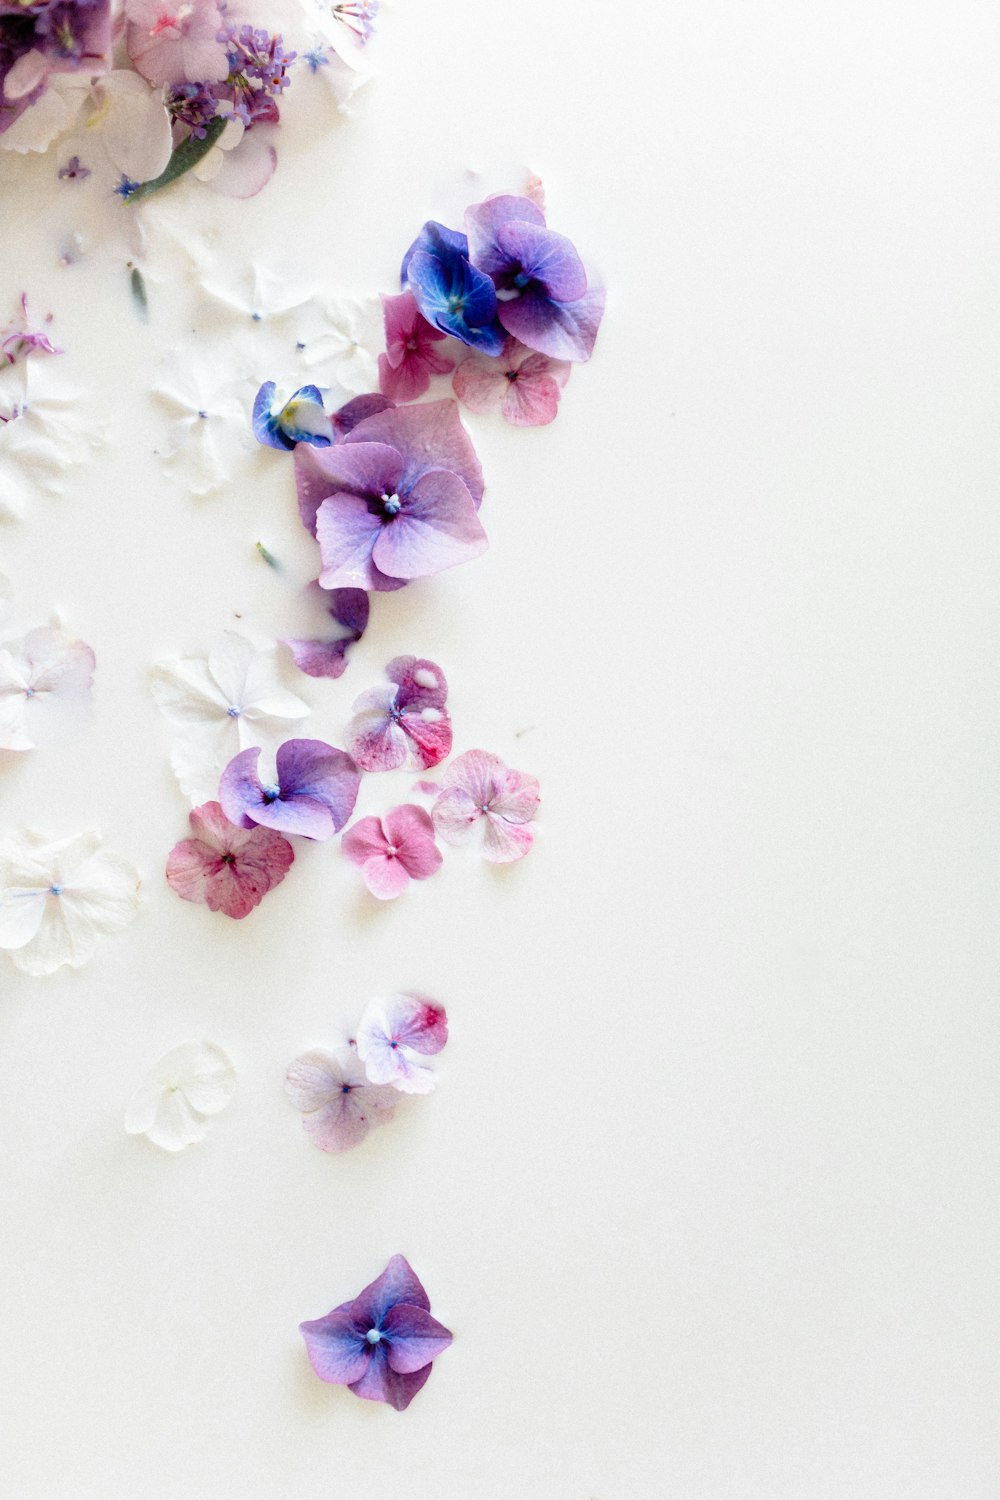 Flower Petals Pictures [HQ] | Download Free Images on Unsplash